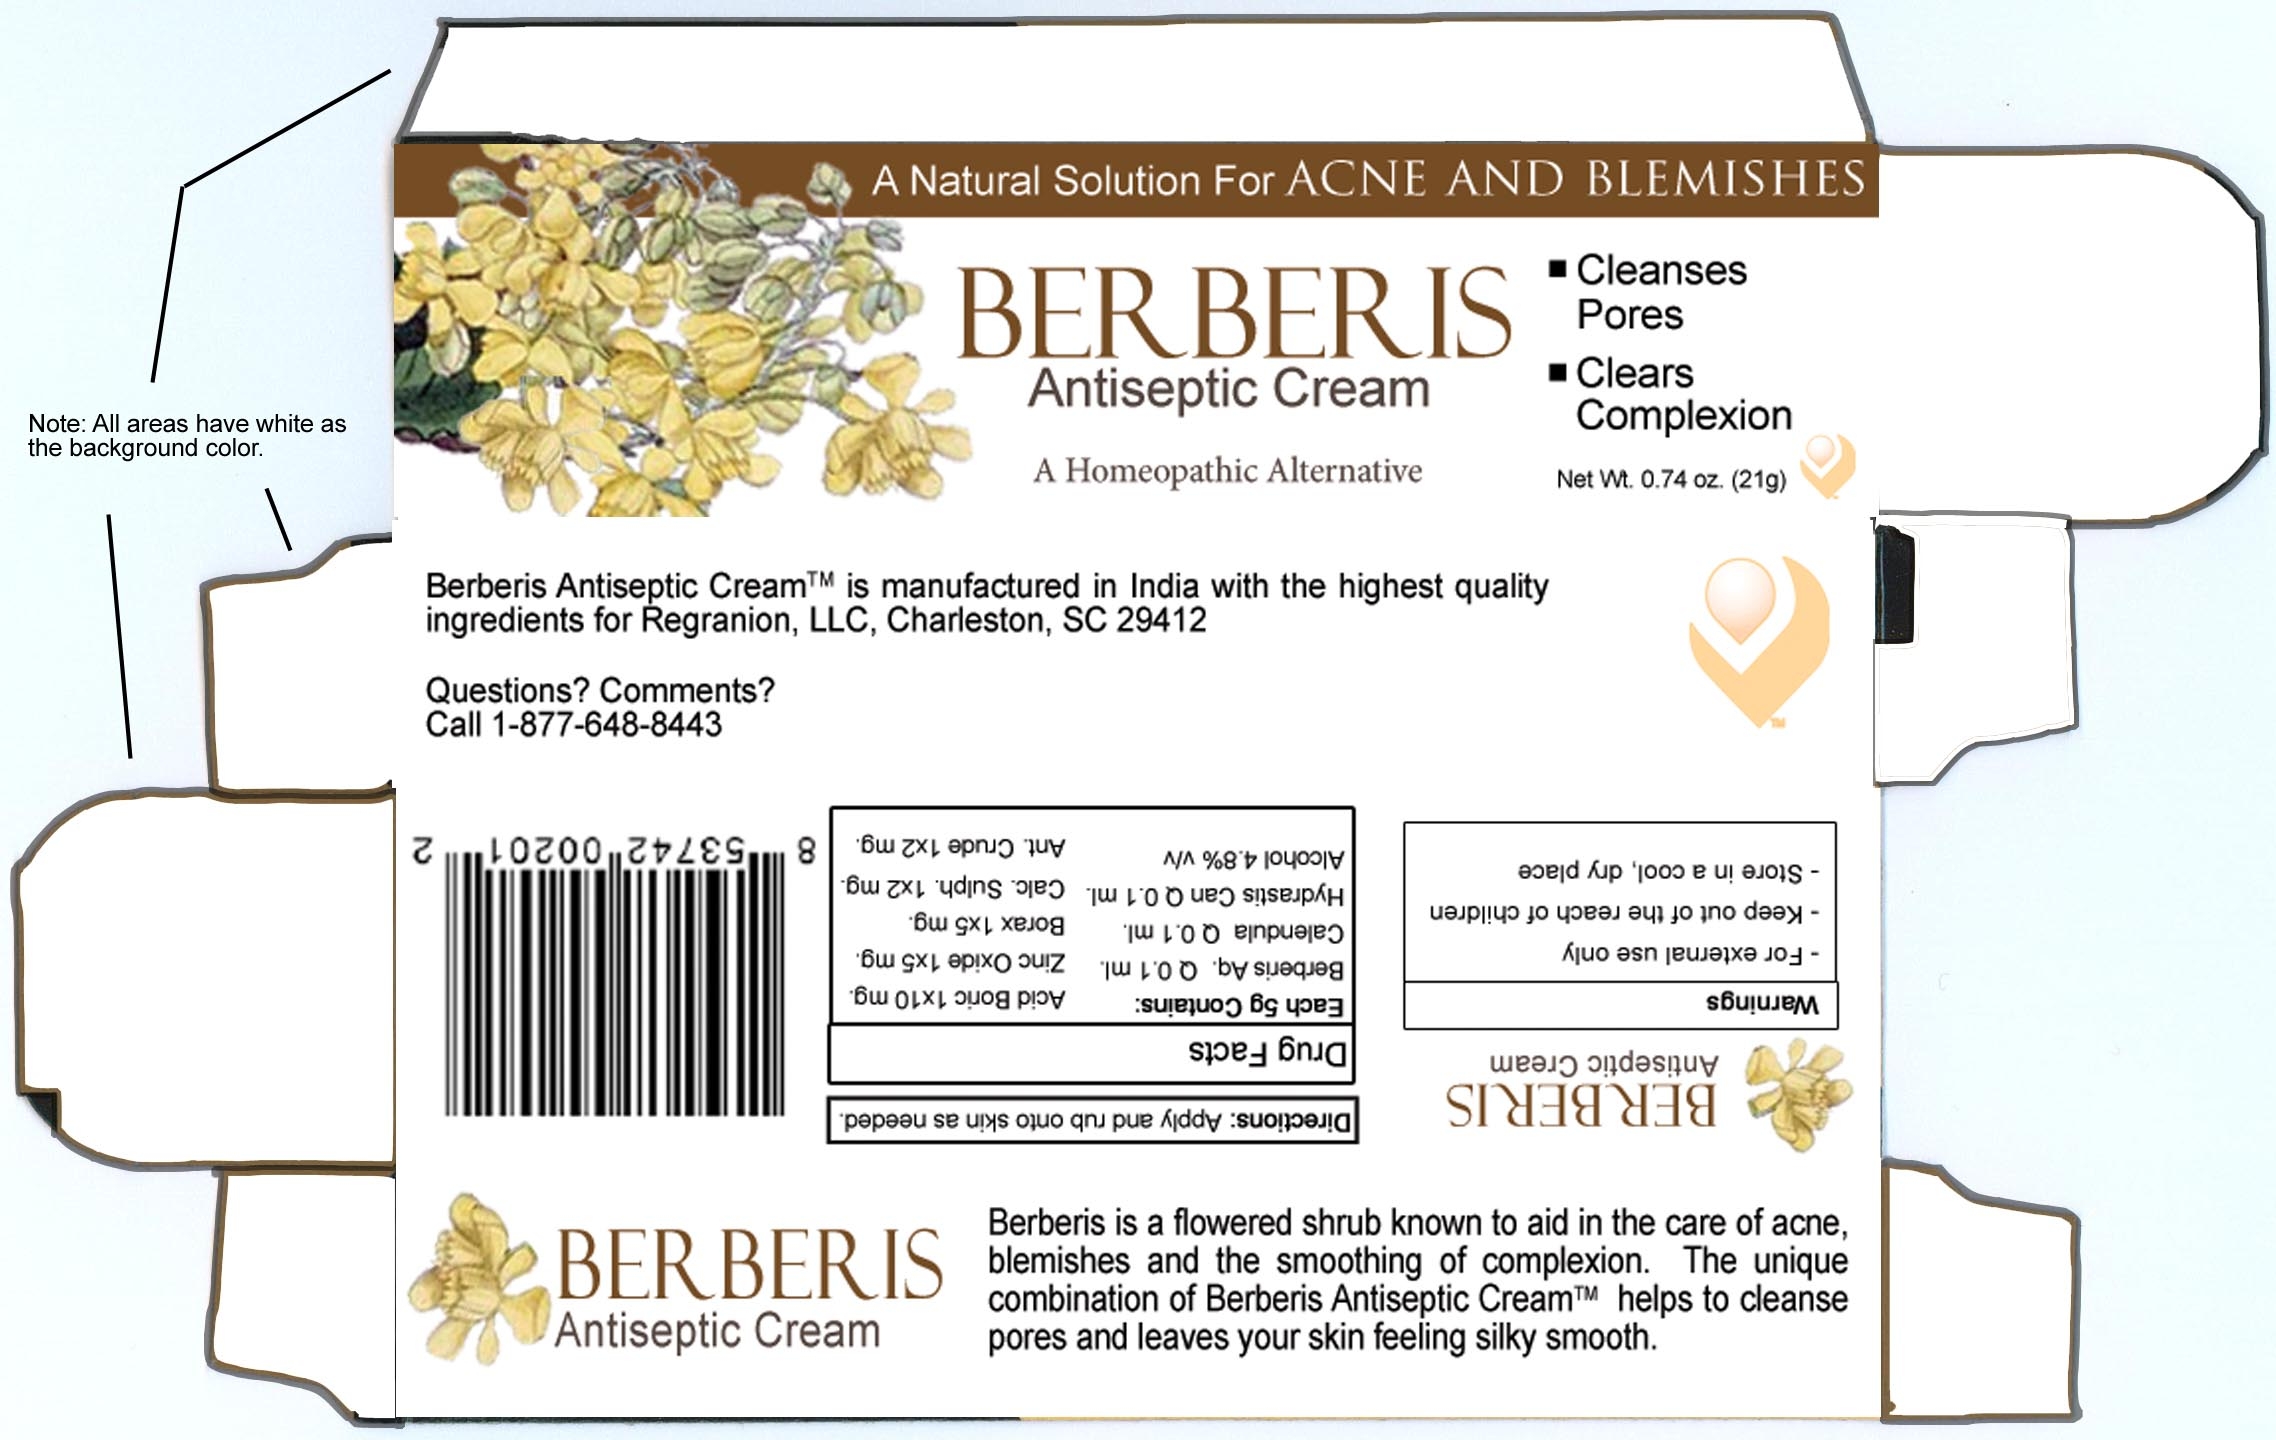 Berberis Full Label